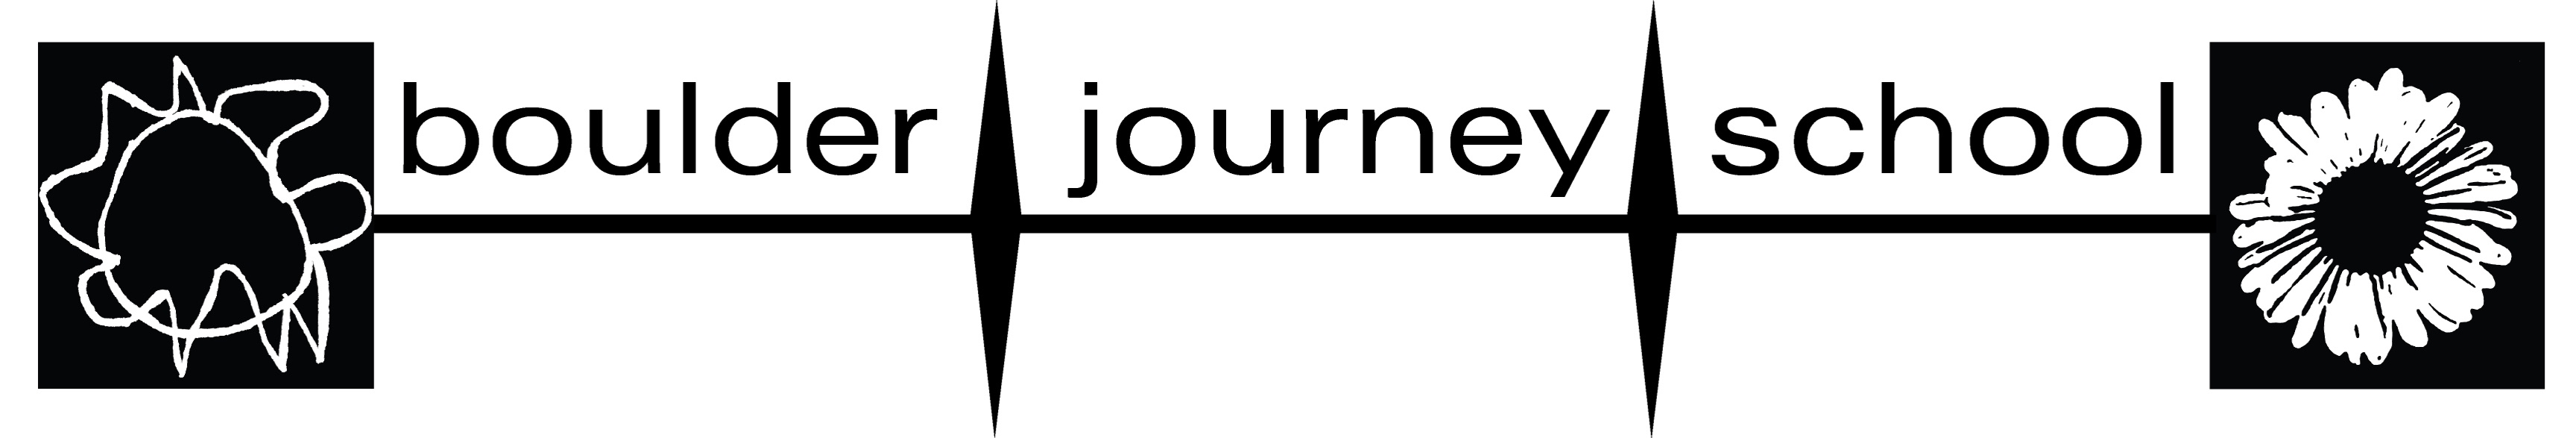 Boulder Journey School logo